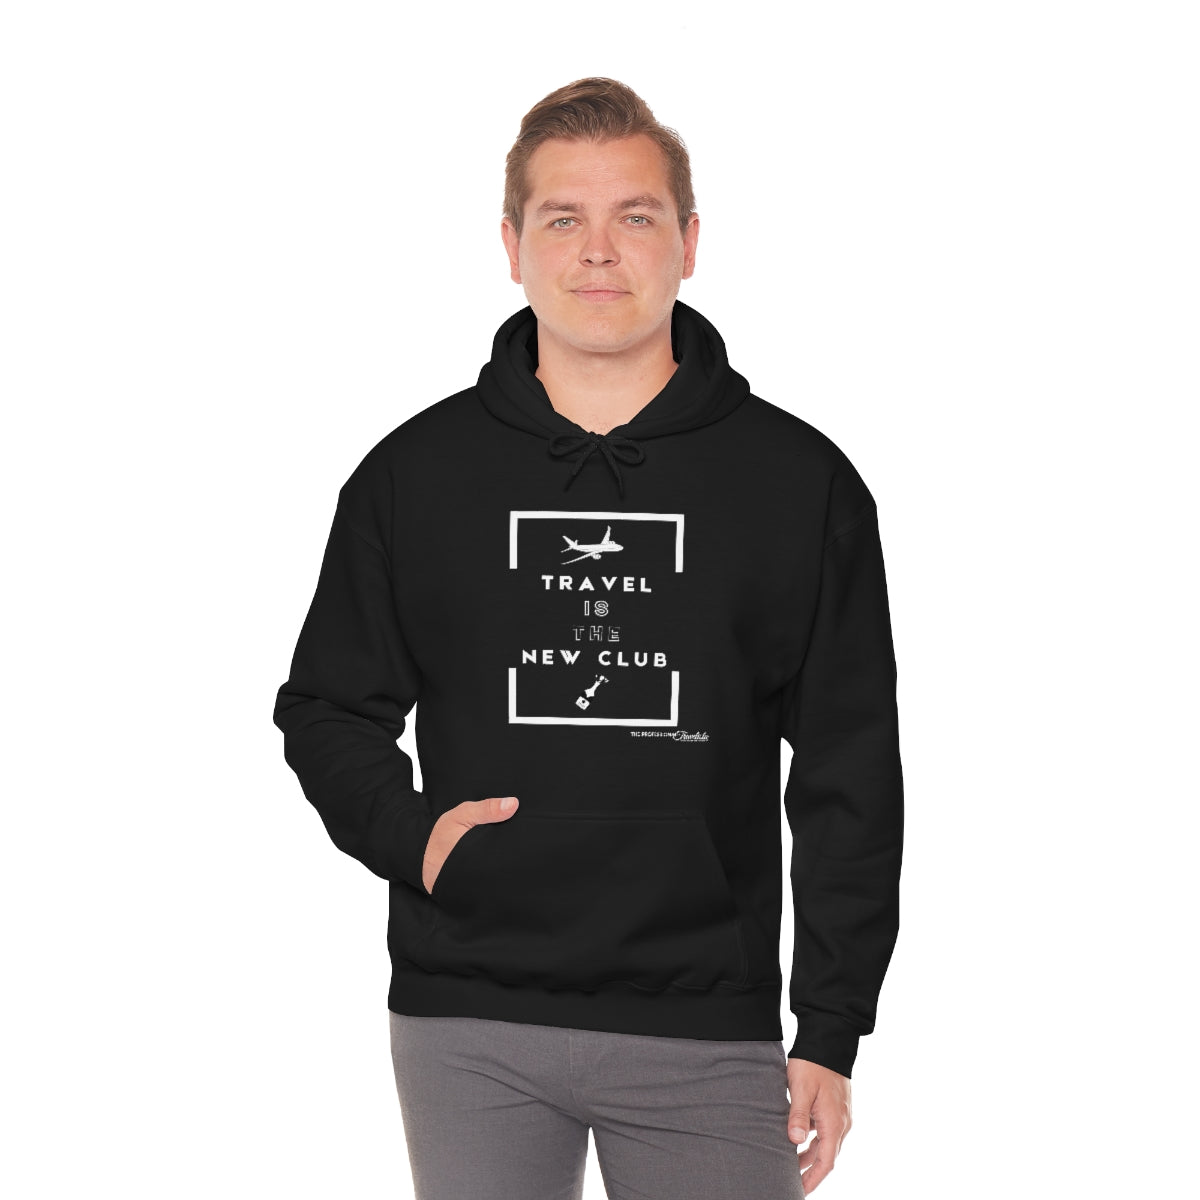 TRAVEL IS THE NEW CLUB Hooded Sweatshirt